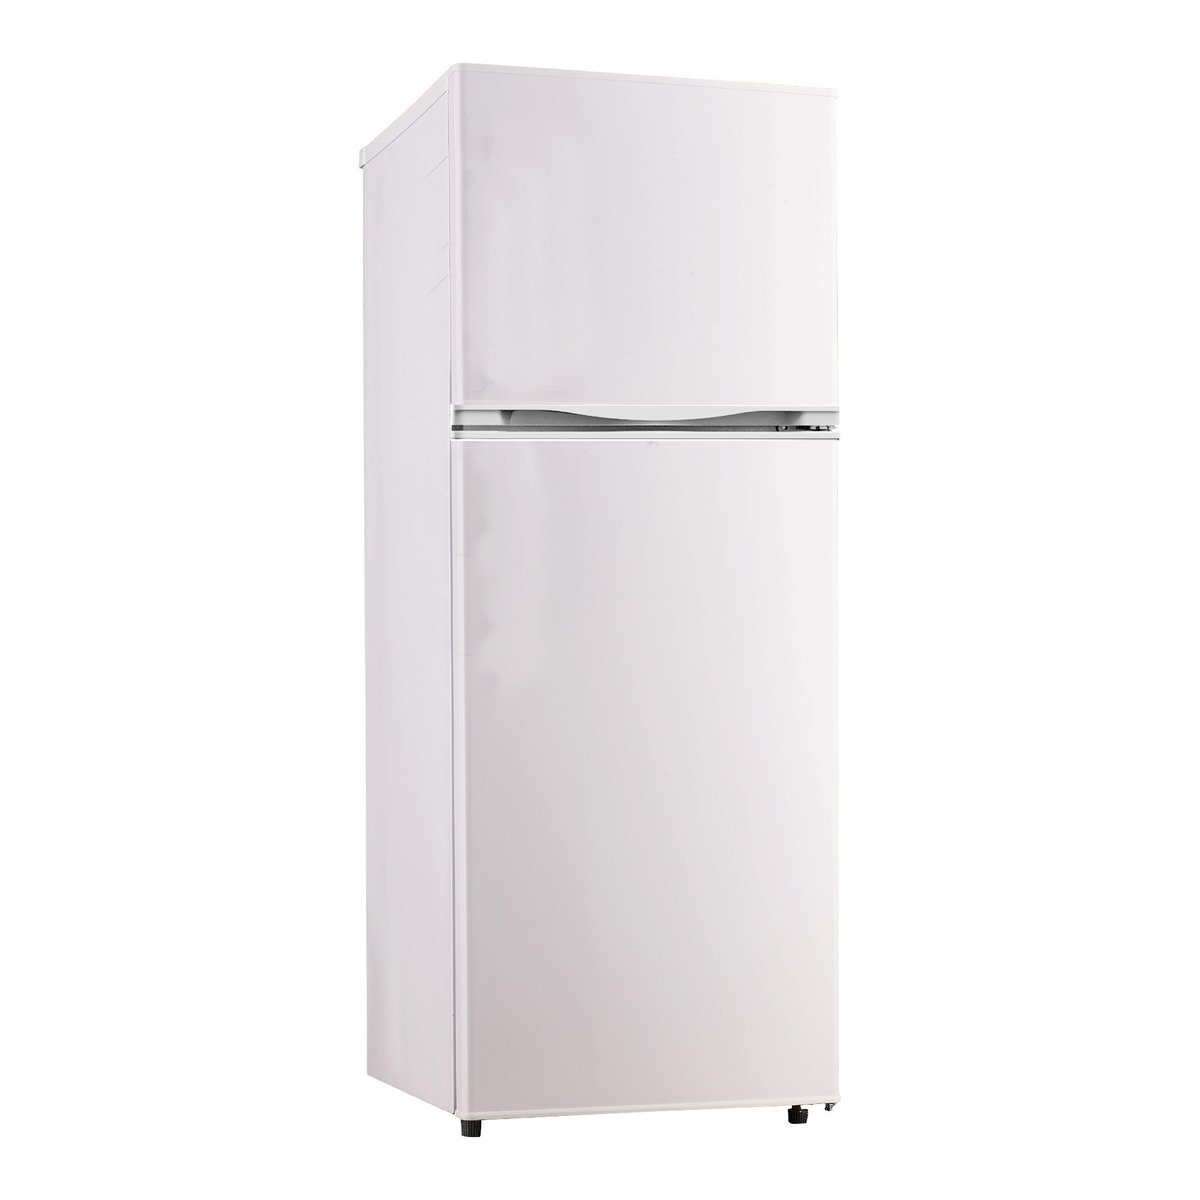 Ikon Refrigerator Double Door IK-KS500 483Ltr